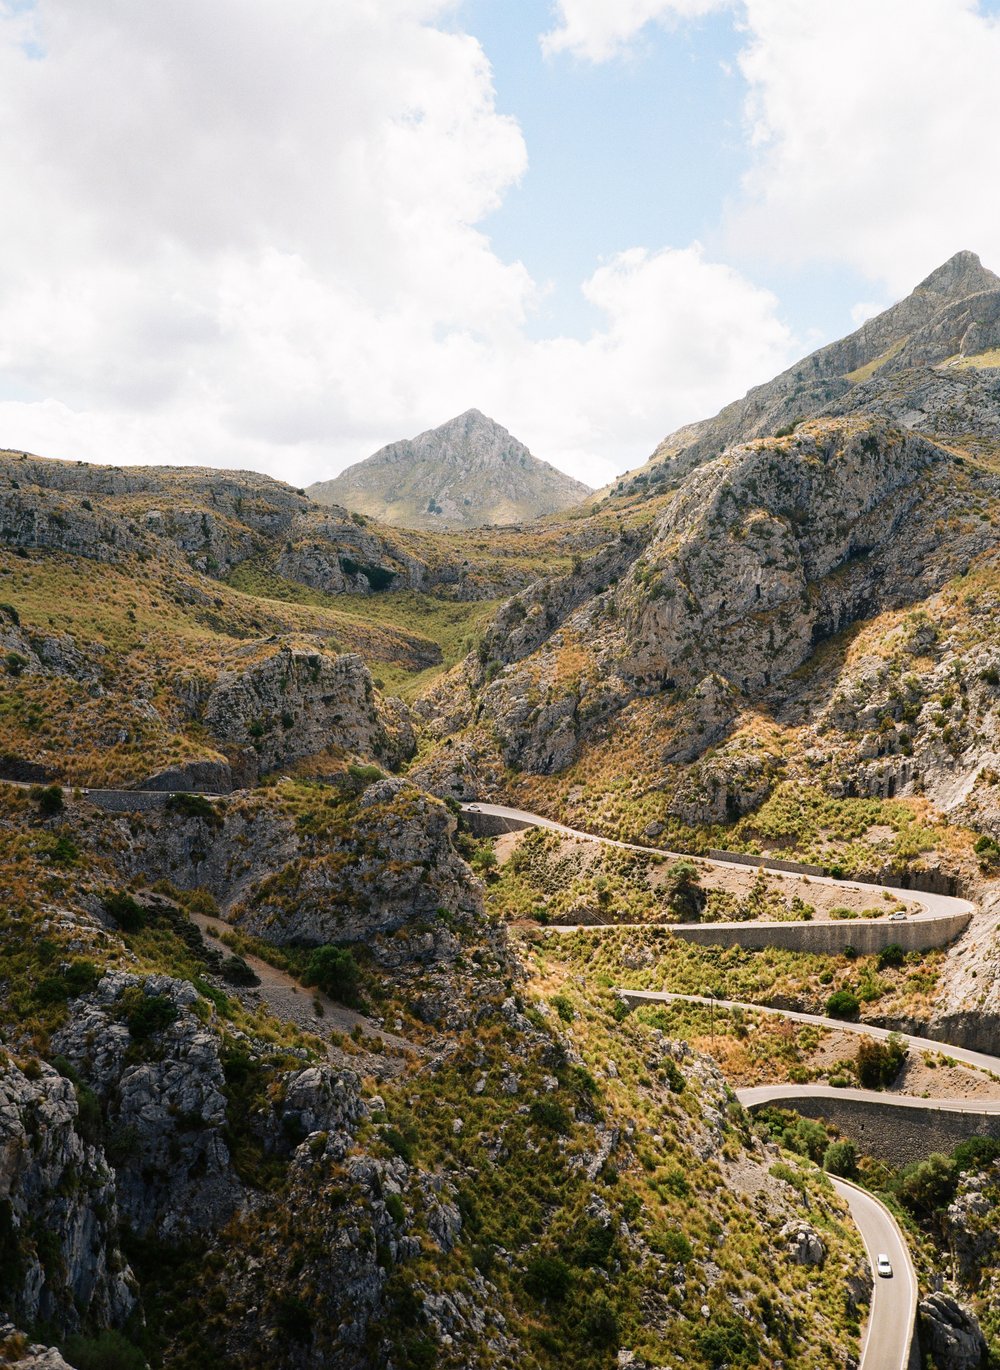  bending roads through the mountains of Mallorca, Spain 